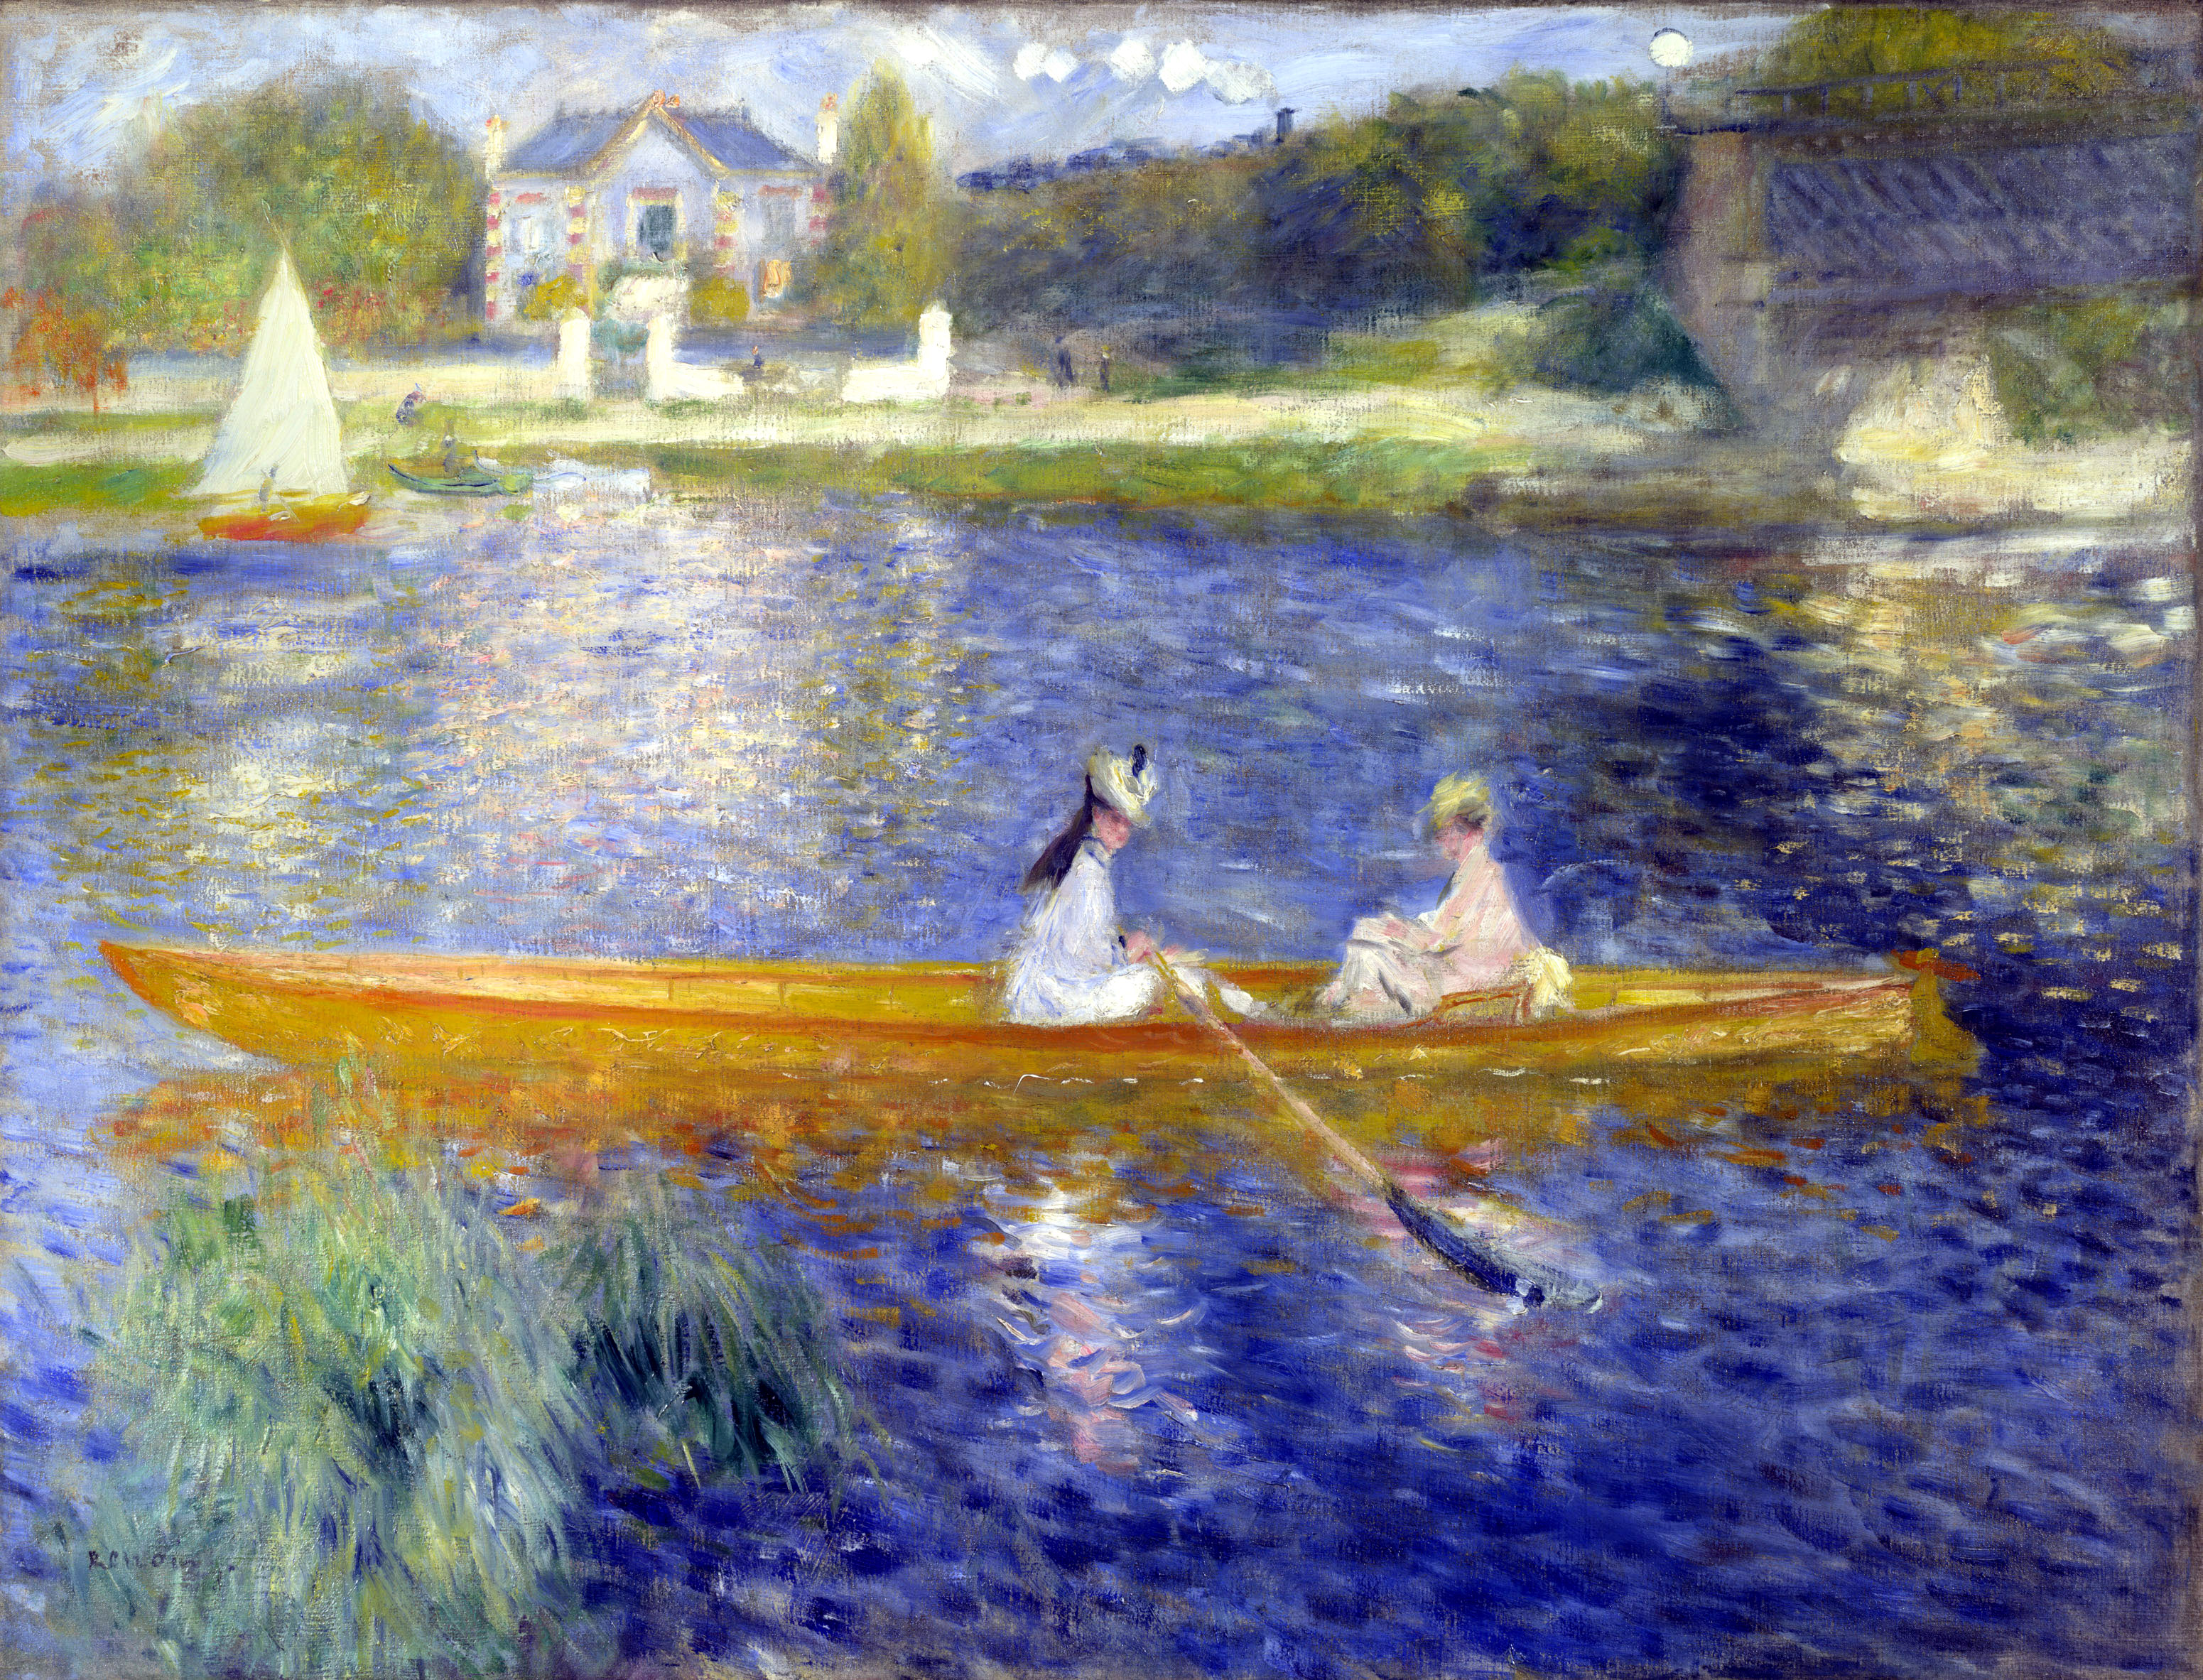 In barca sulla Senna by Pierre-Auguste Renoir - 1875 - 71 cm x 92 cm 